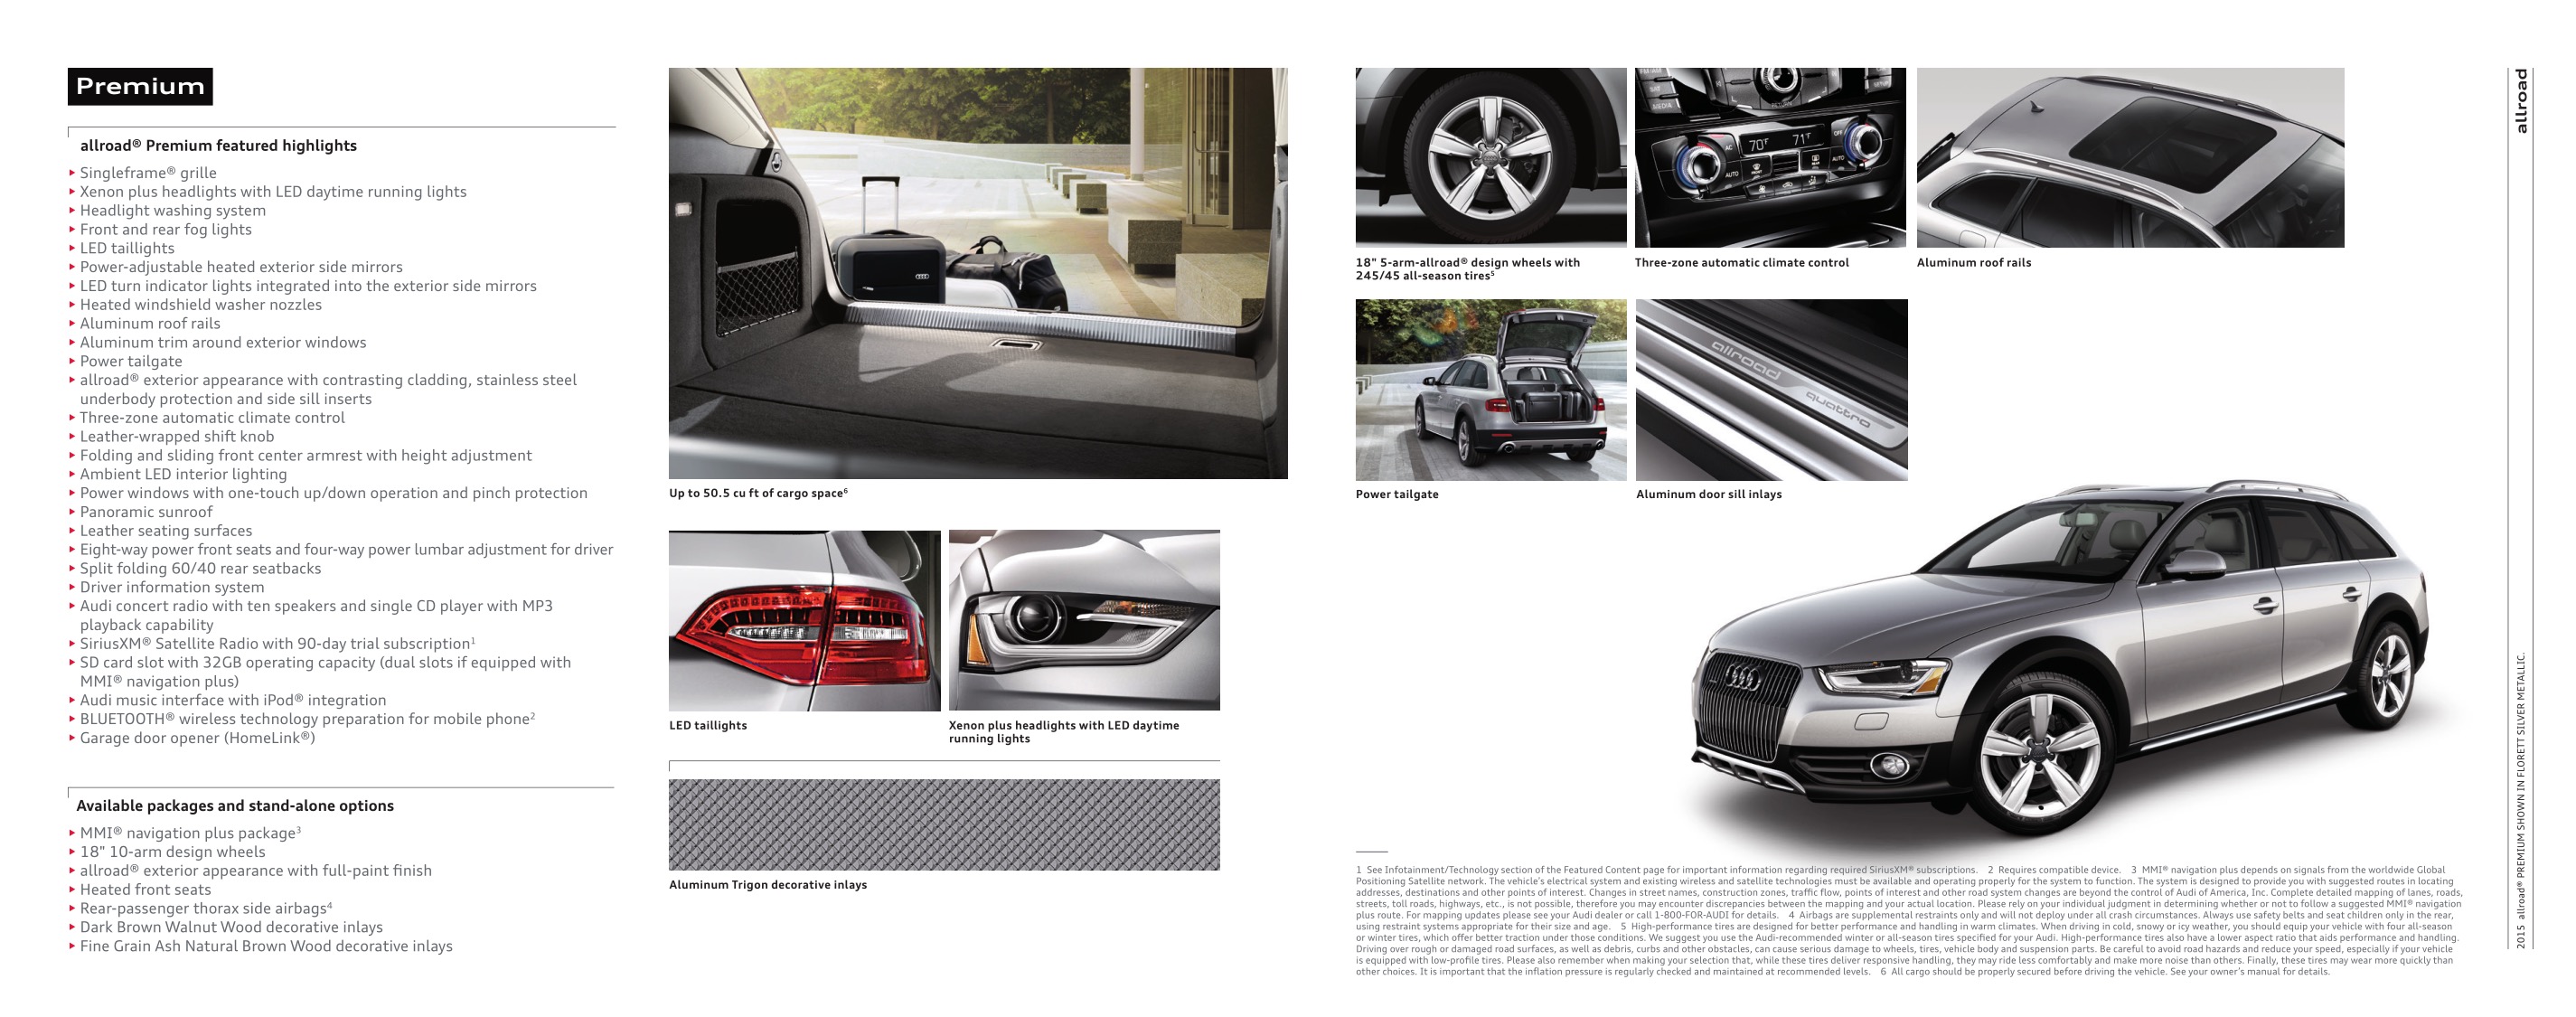 2015 Audi Allroad Brochure Page 29